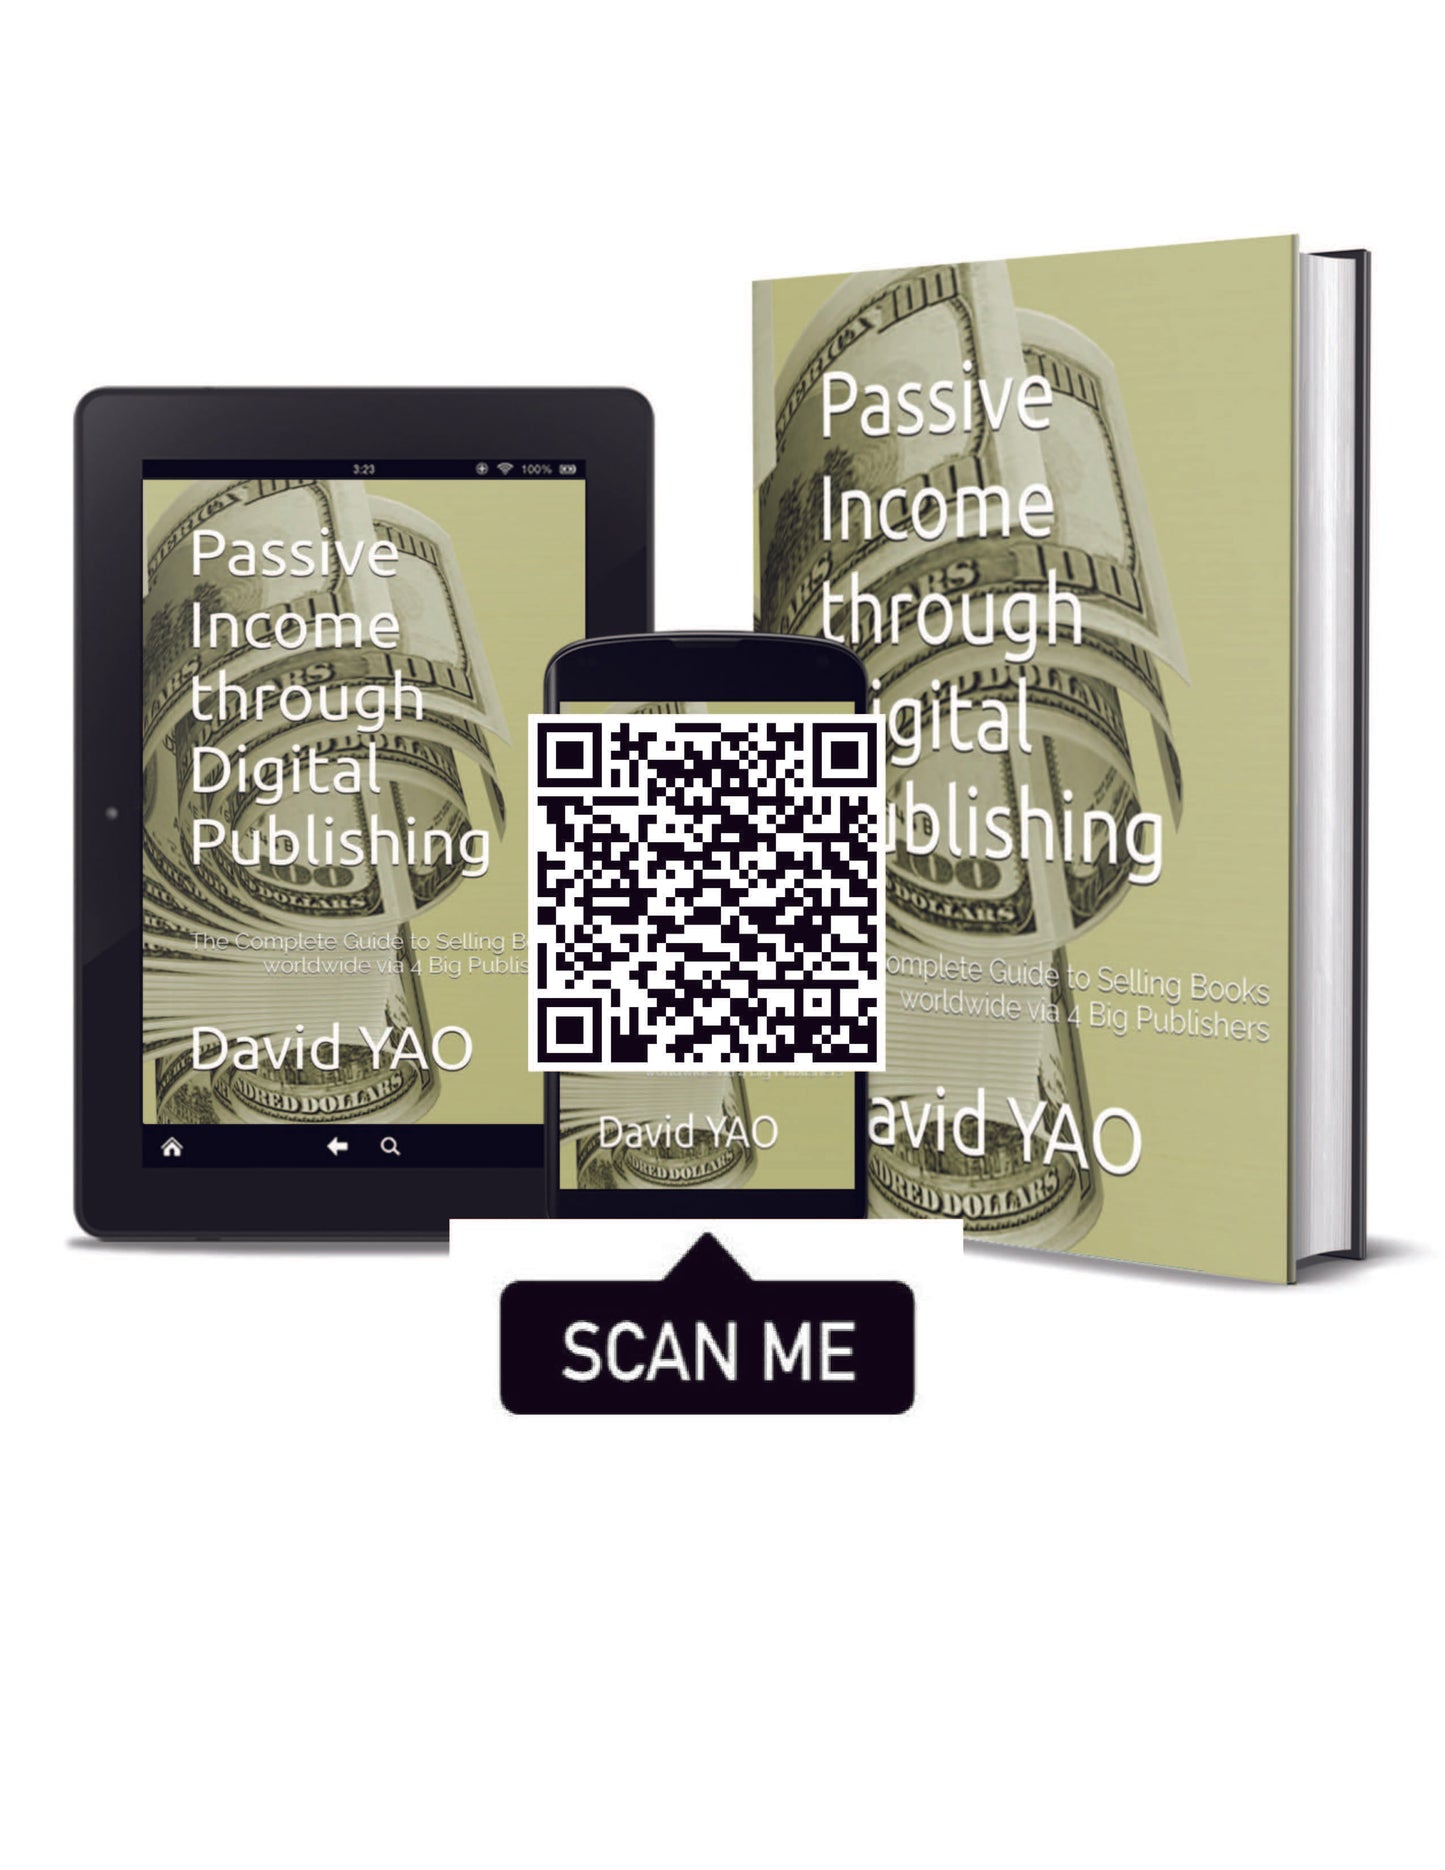 PDF- Passive Income through Digital Publishing-Selling Books on Amazon, Google Play Books, Apple Books, and Kobo